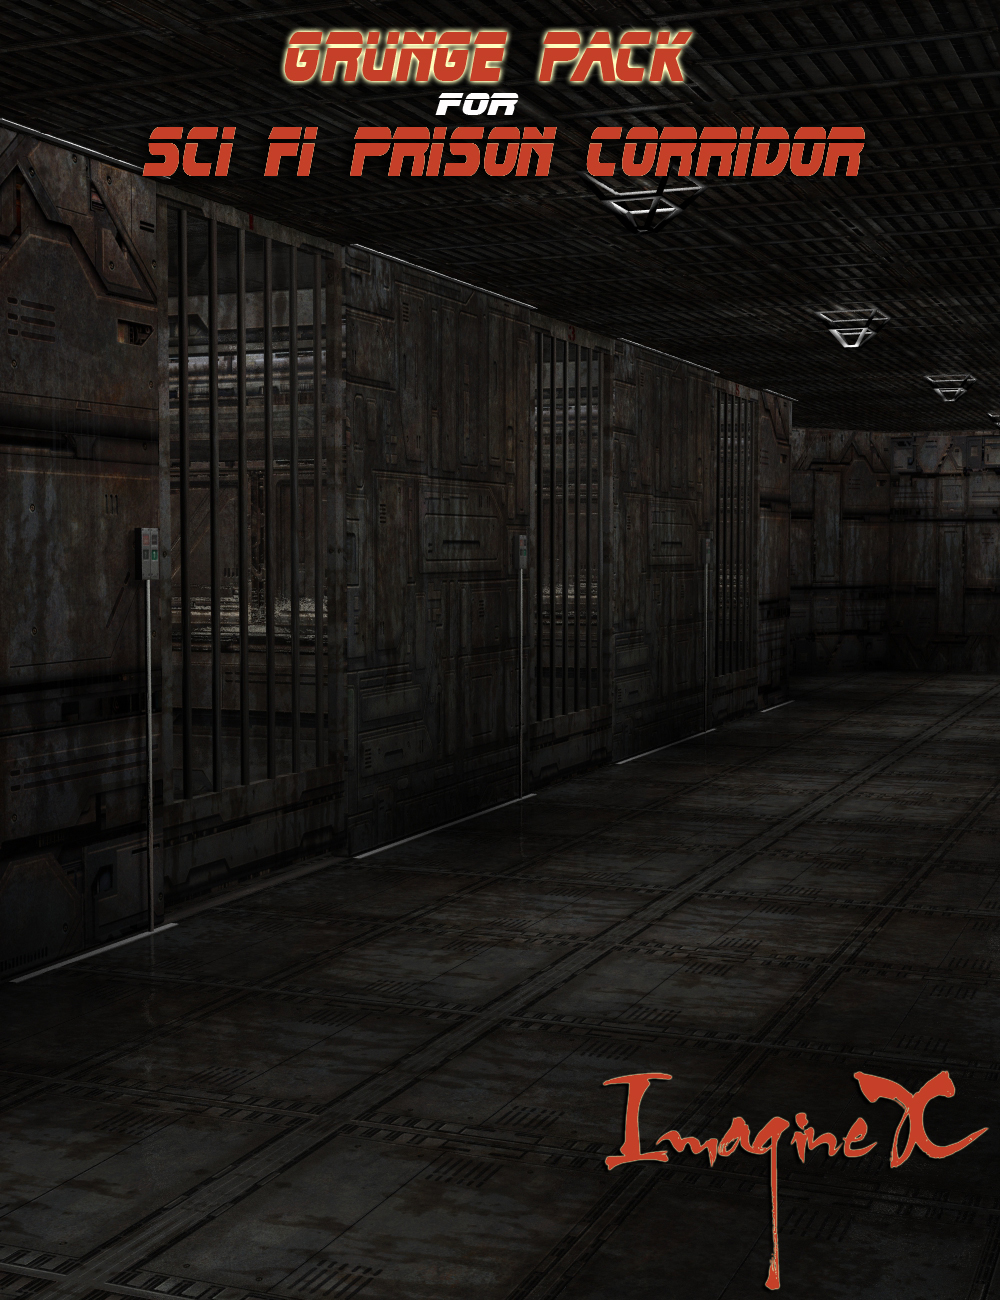 Grunge Pack for Sci Fi Prison Corridor by: ImagineX, 3D Models by Daz 3D